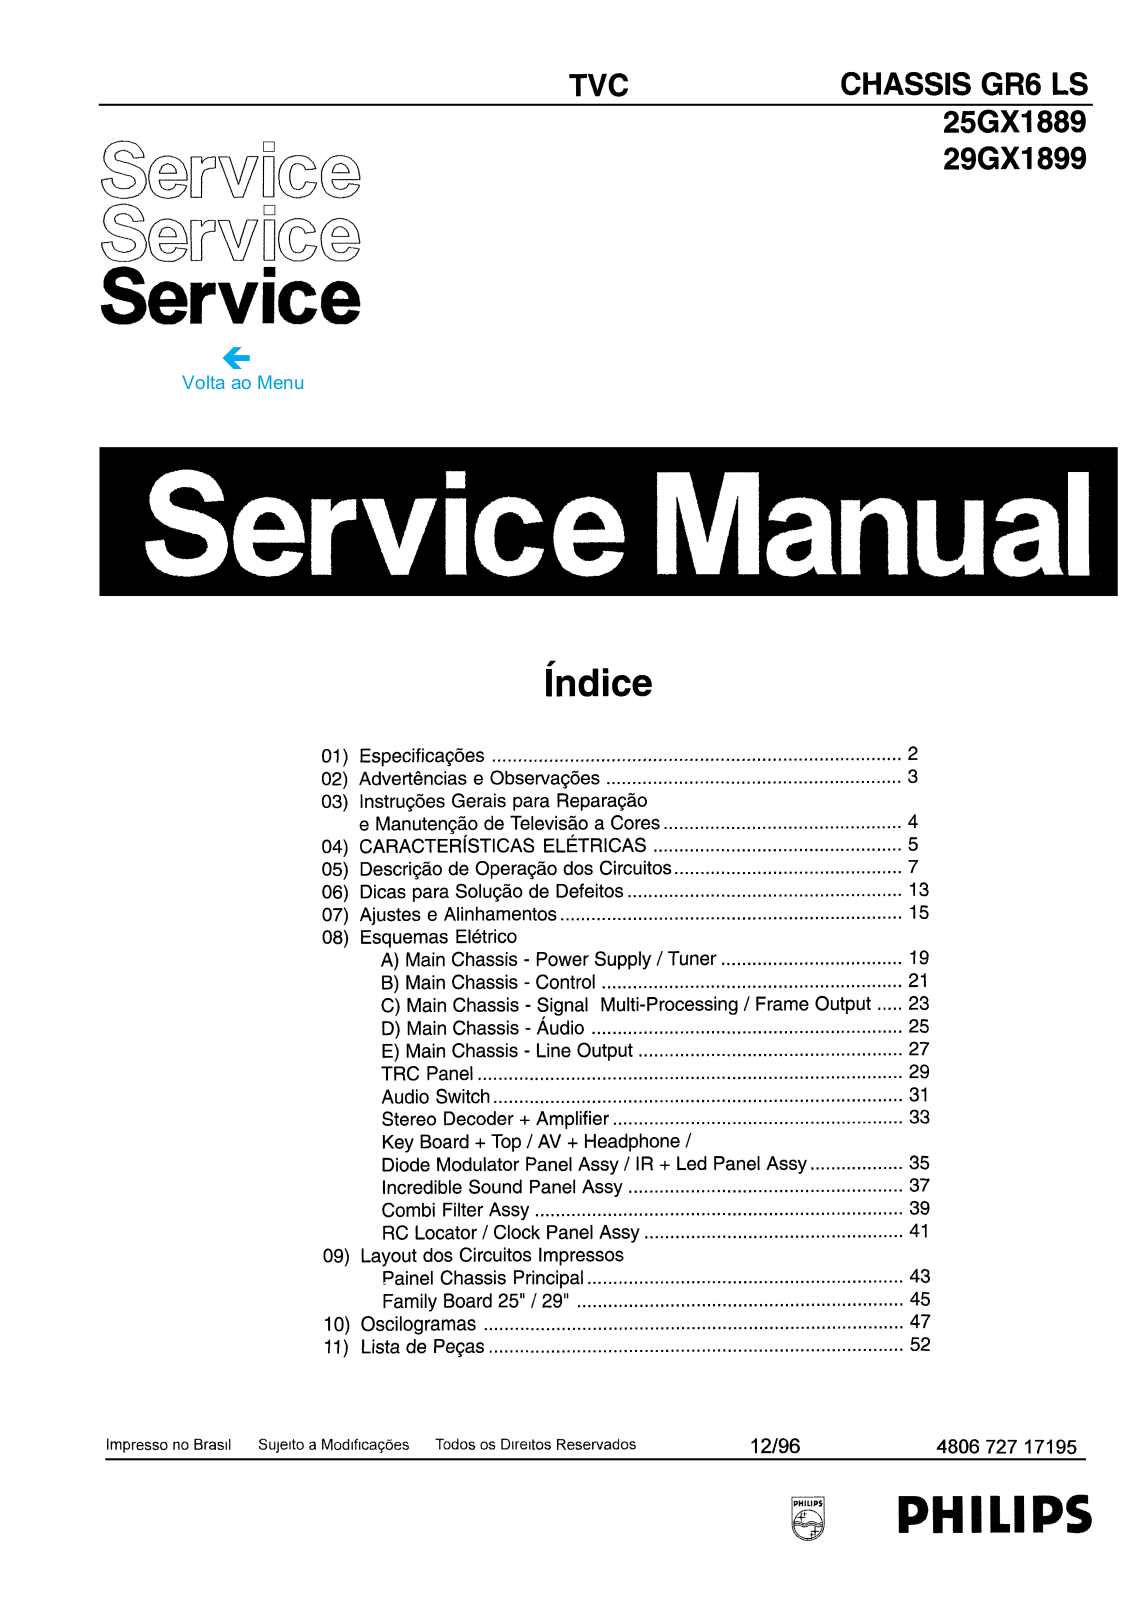 Philips 29 GX 1899, 29 GX 1889 Service Manual